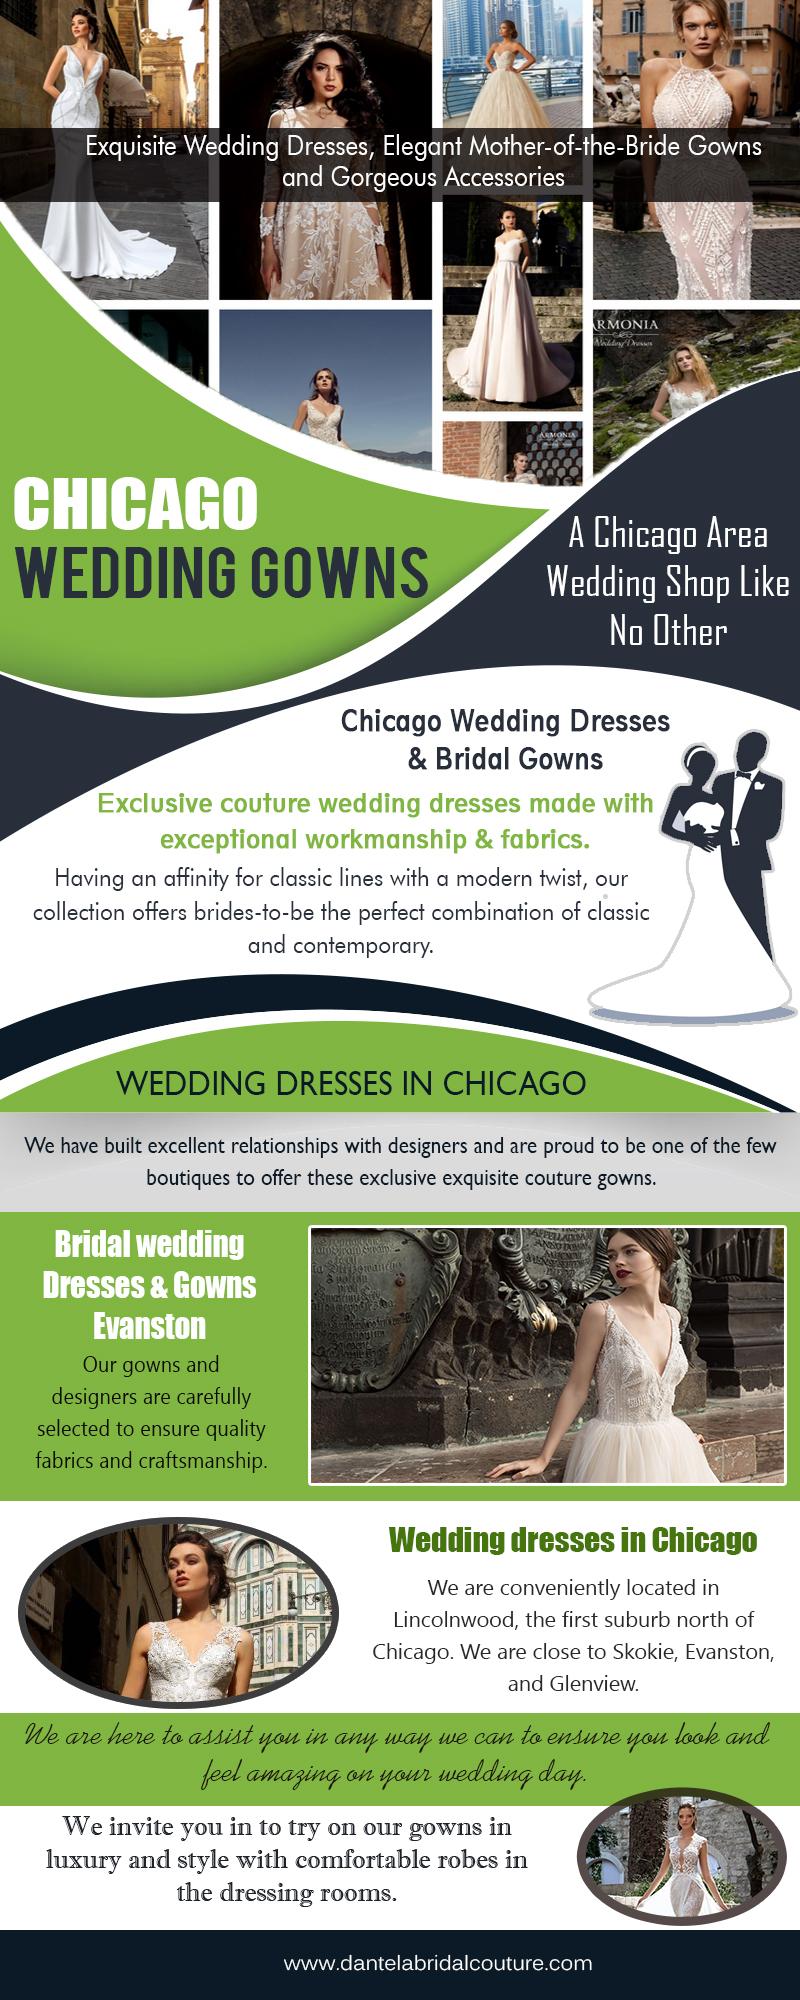 Chicago Wedding Gowns | https://dantelabridalcouture.com